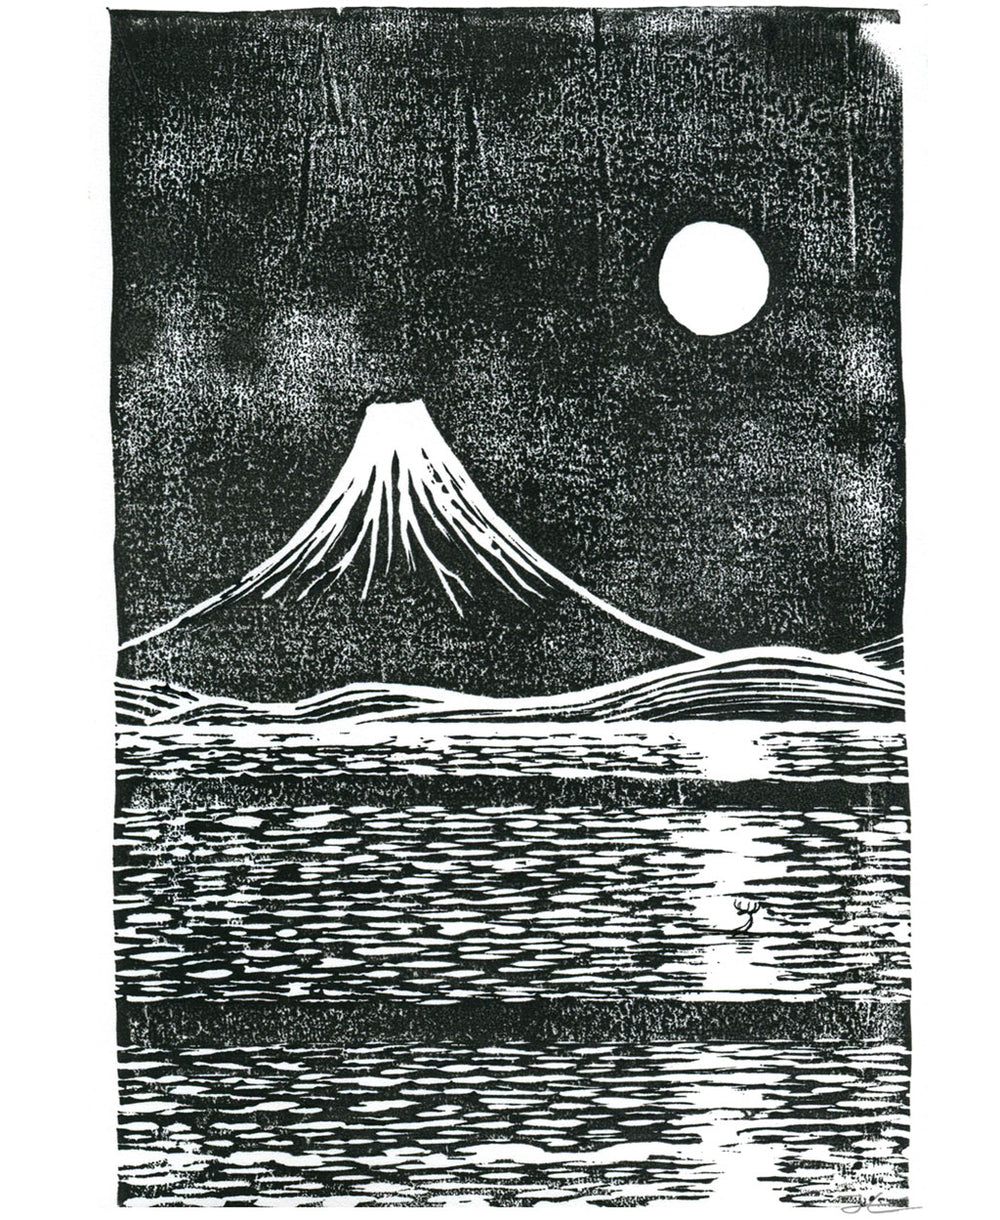 Fuji San 2. Original block print/ illustration - SOLD OUT